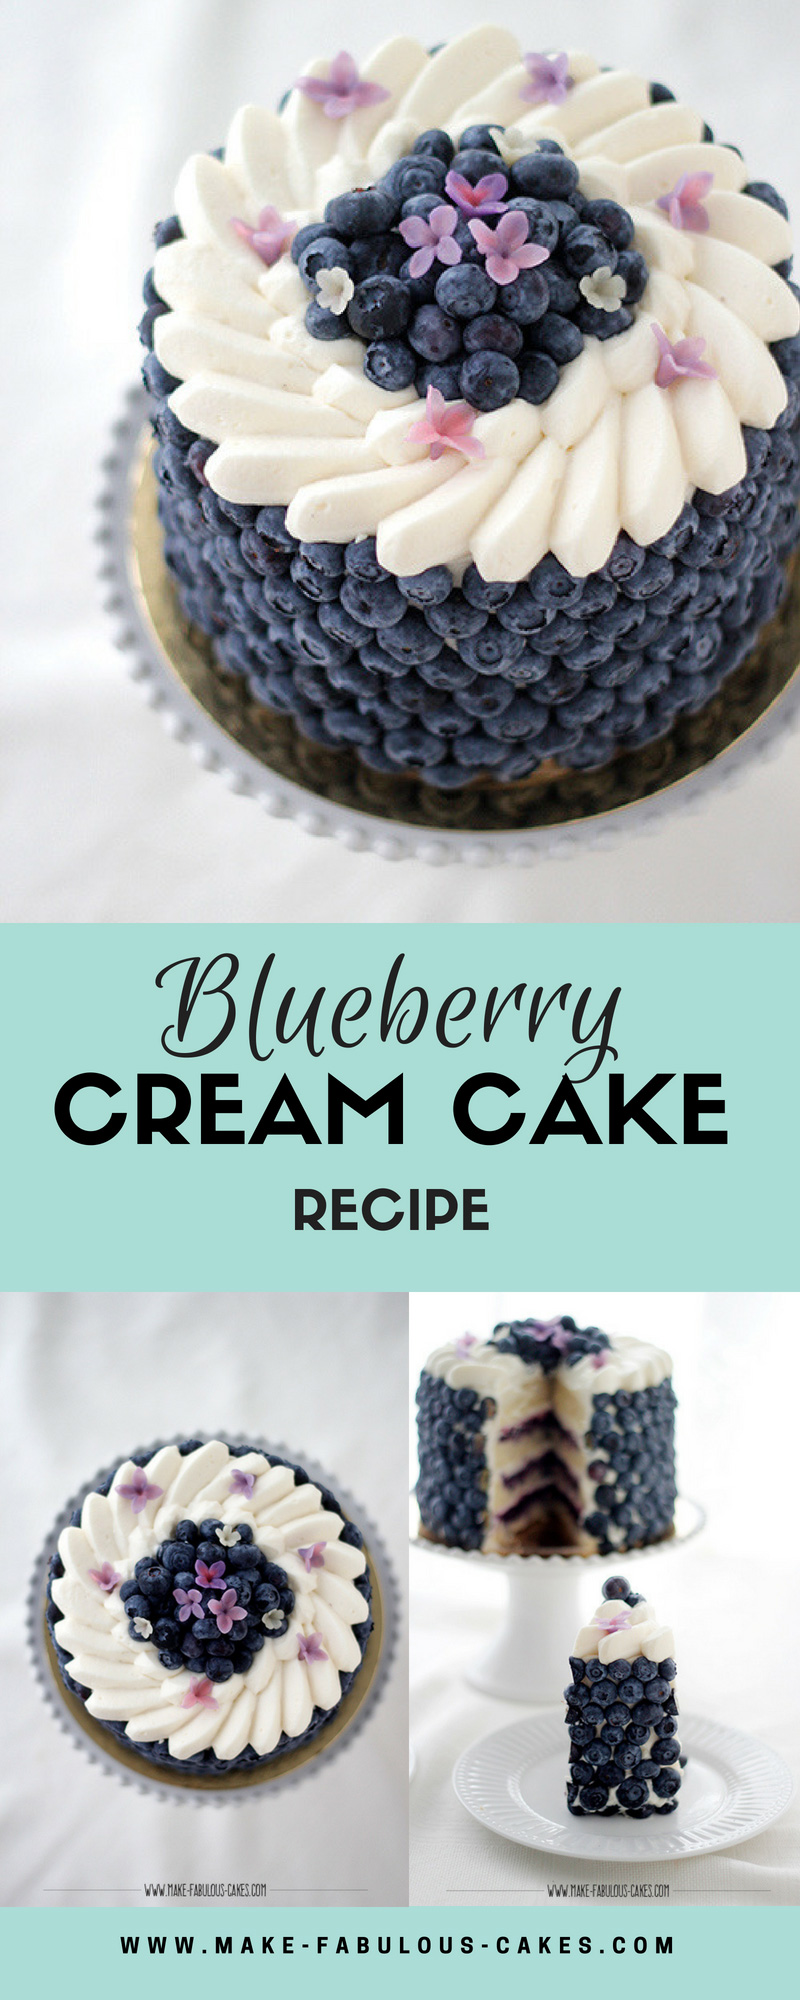 Blueberry cream cake recipe